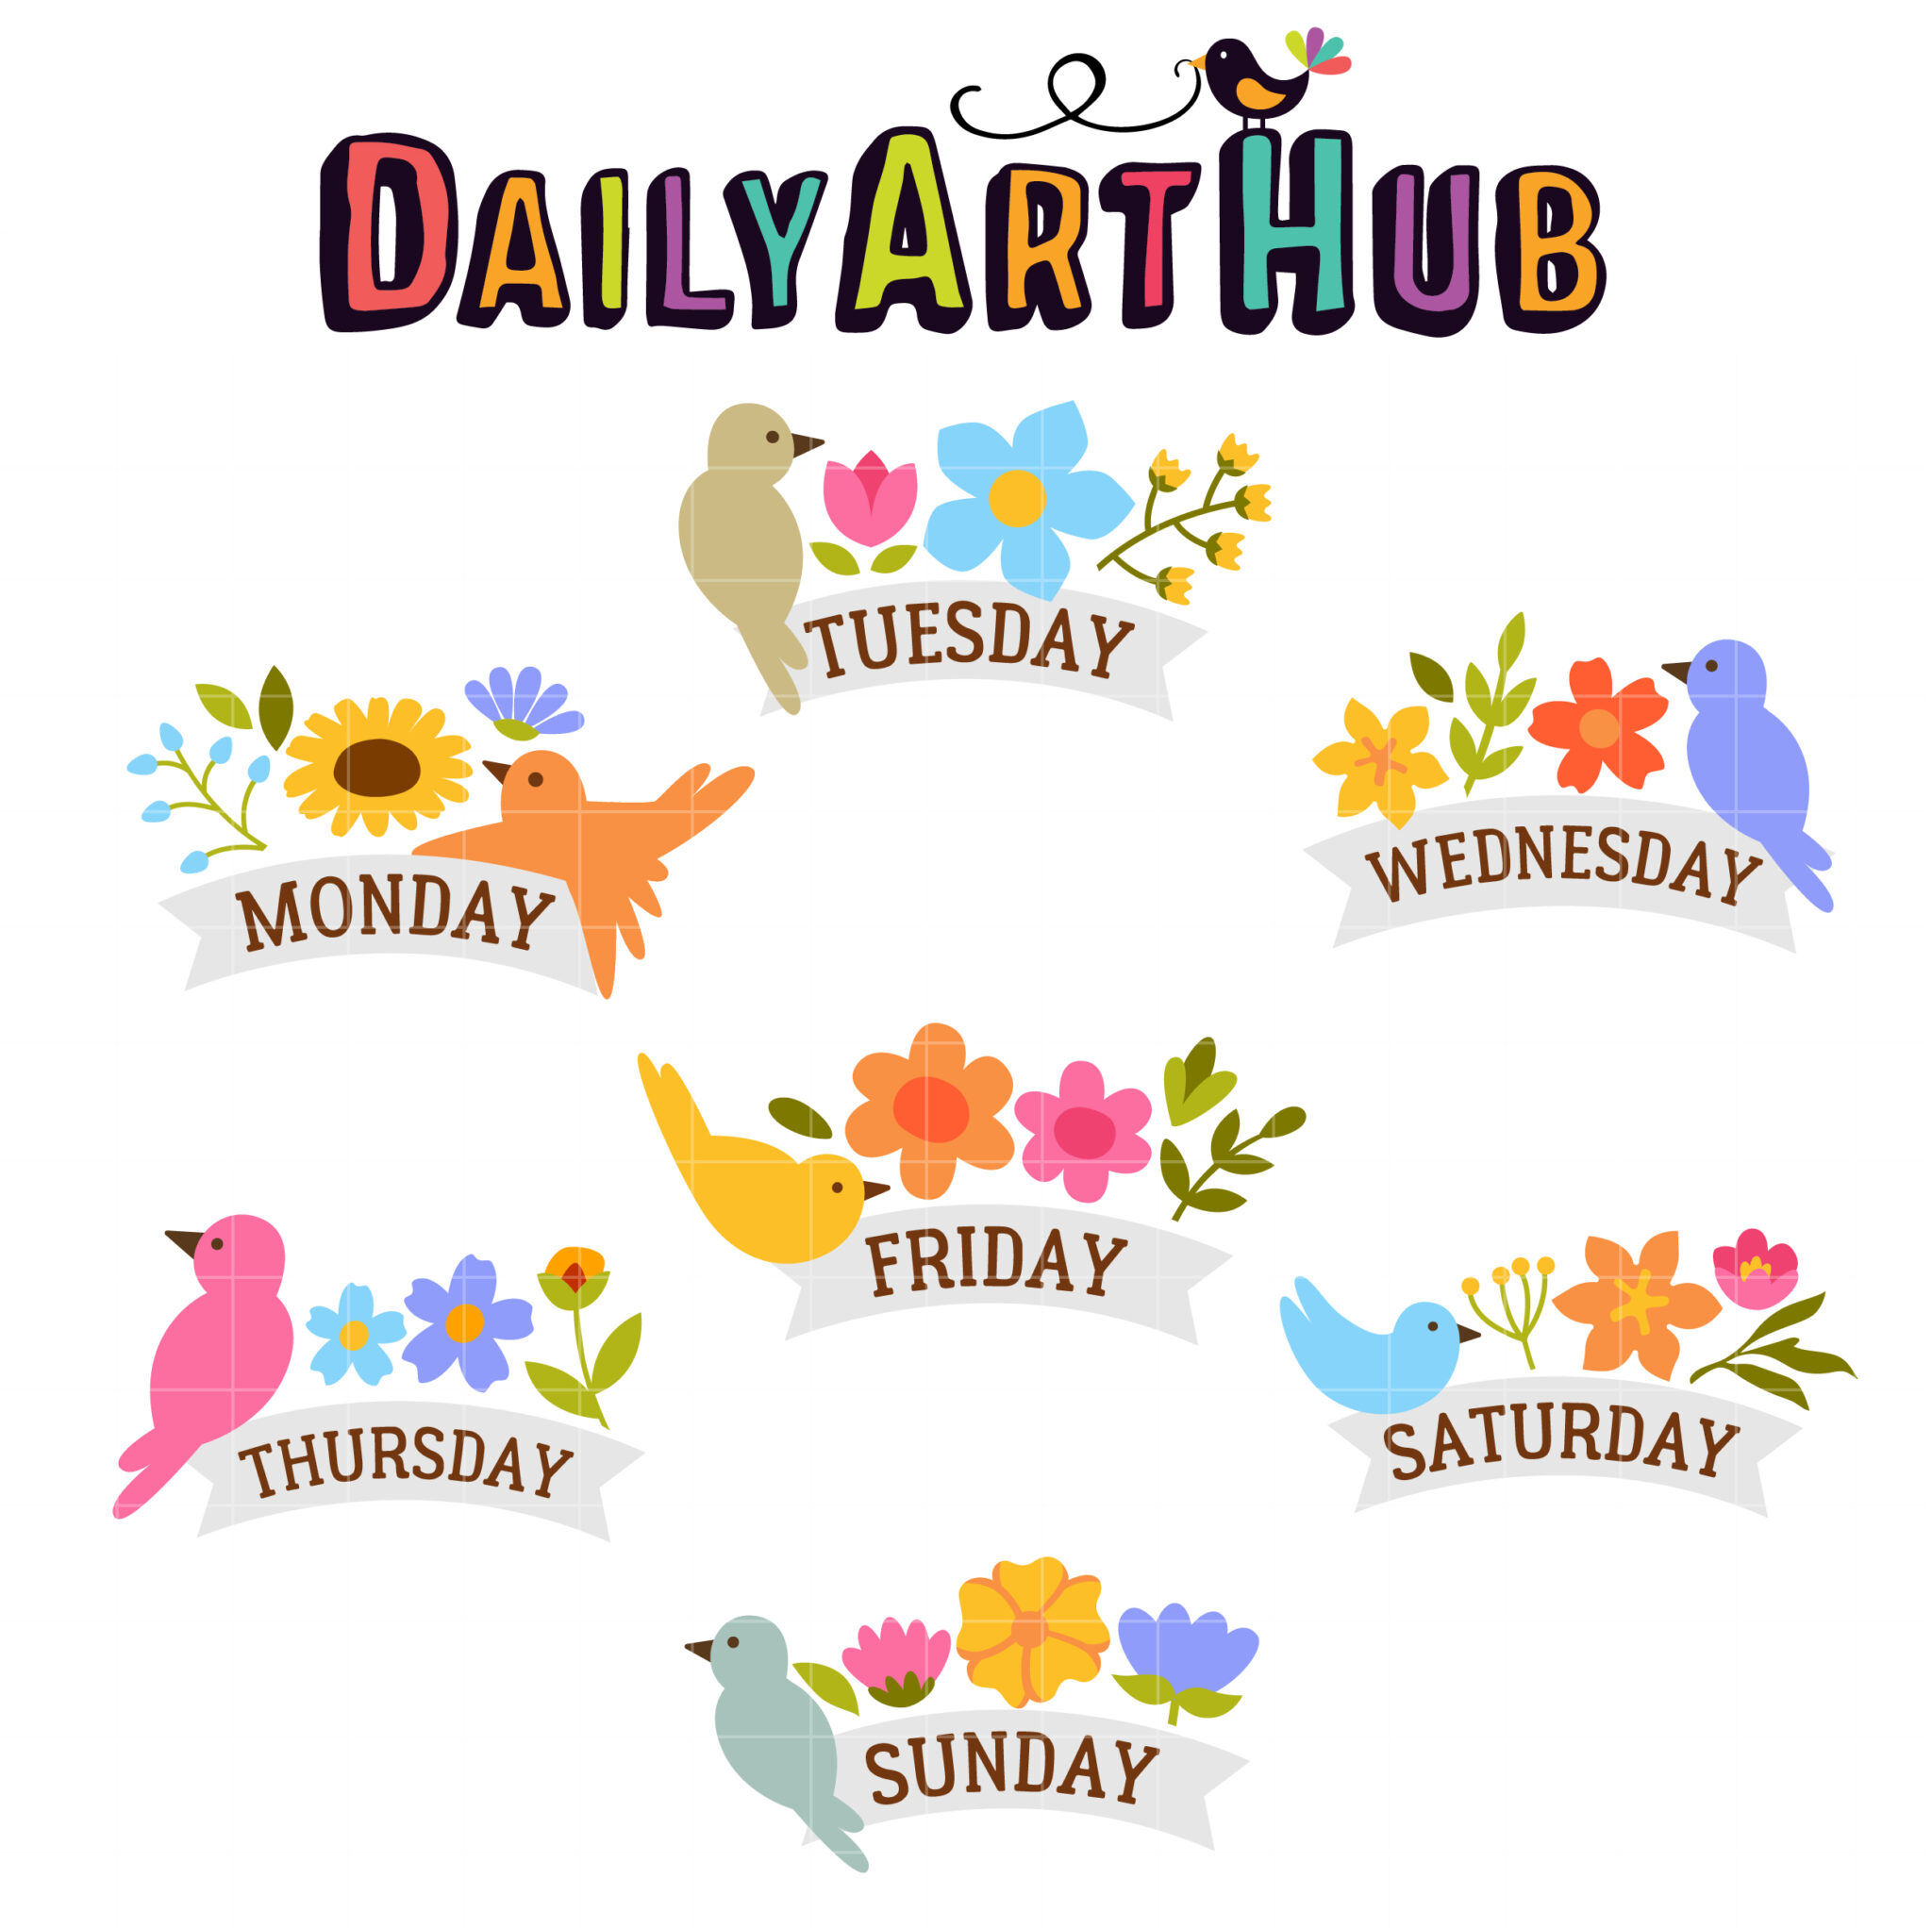 days-of-the-week-birds-clip-art-set-daily-art-hub-graphics